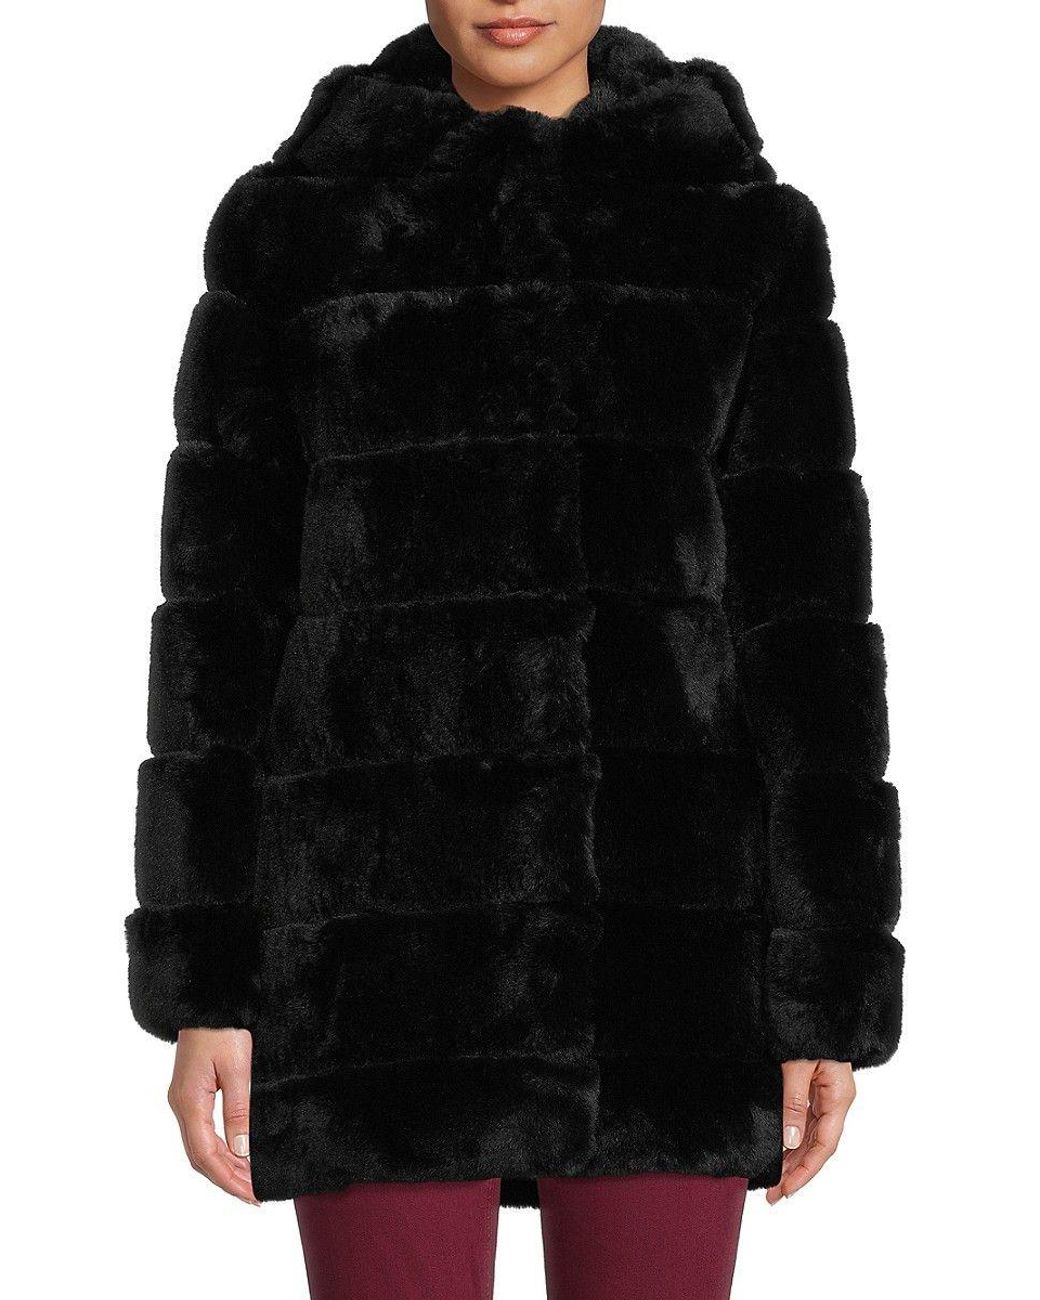 BCBGMAXAZRIA Bcbgmaxazria Felicia Quilted Faux Fur Hooded Coat in Black |  Lyst